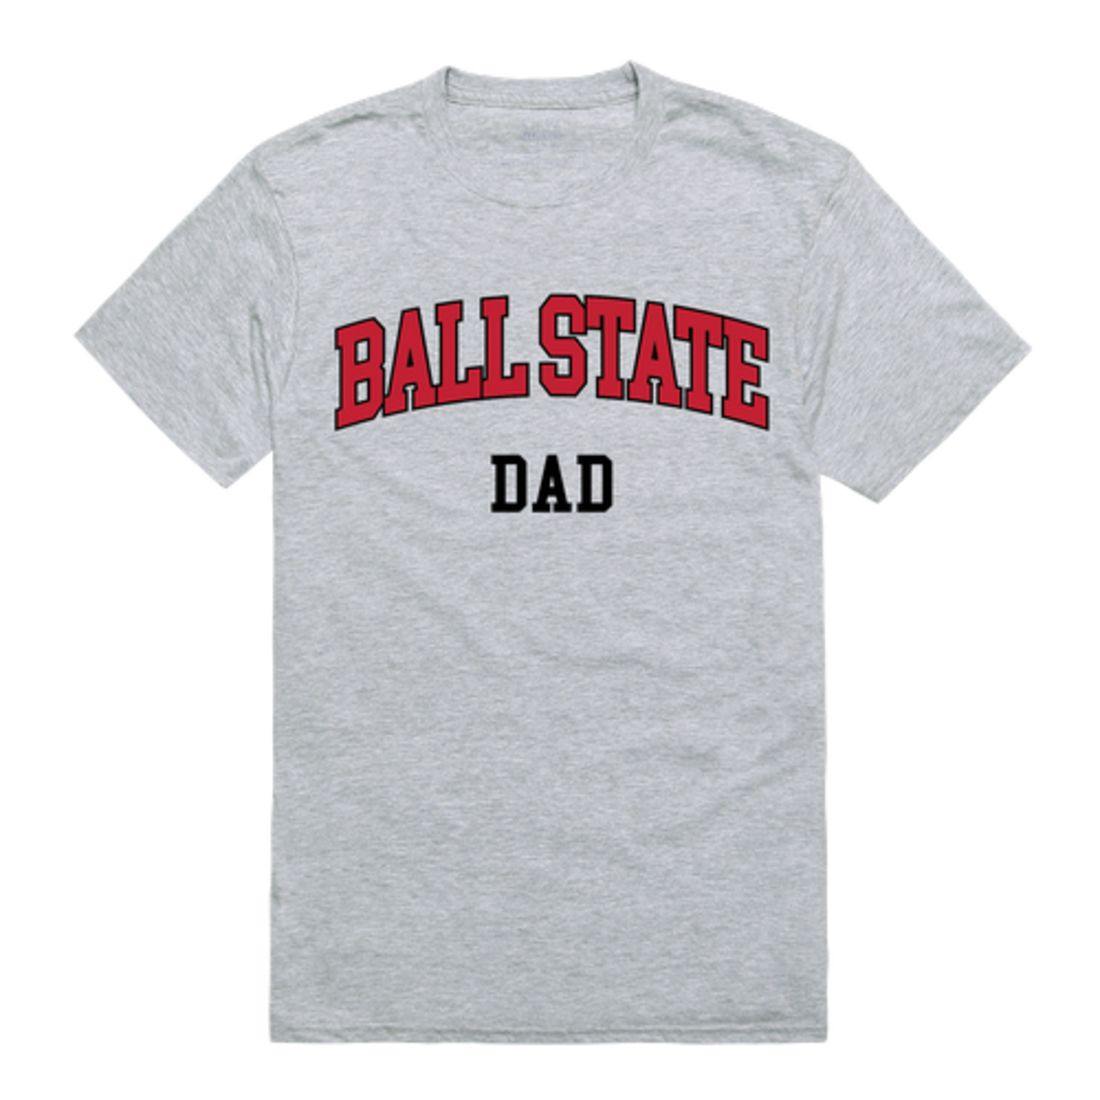 BSU Ball State University College Dad T-Shirt-Campus-Wardrobe